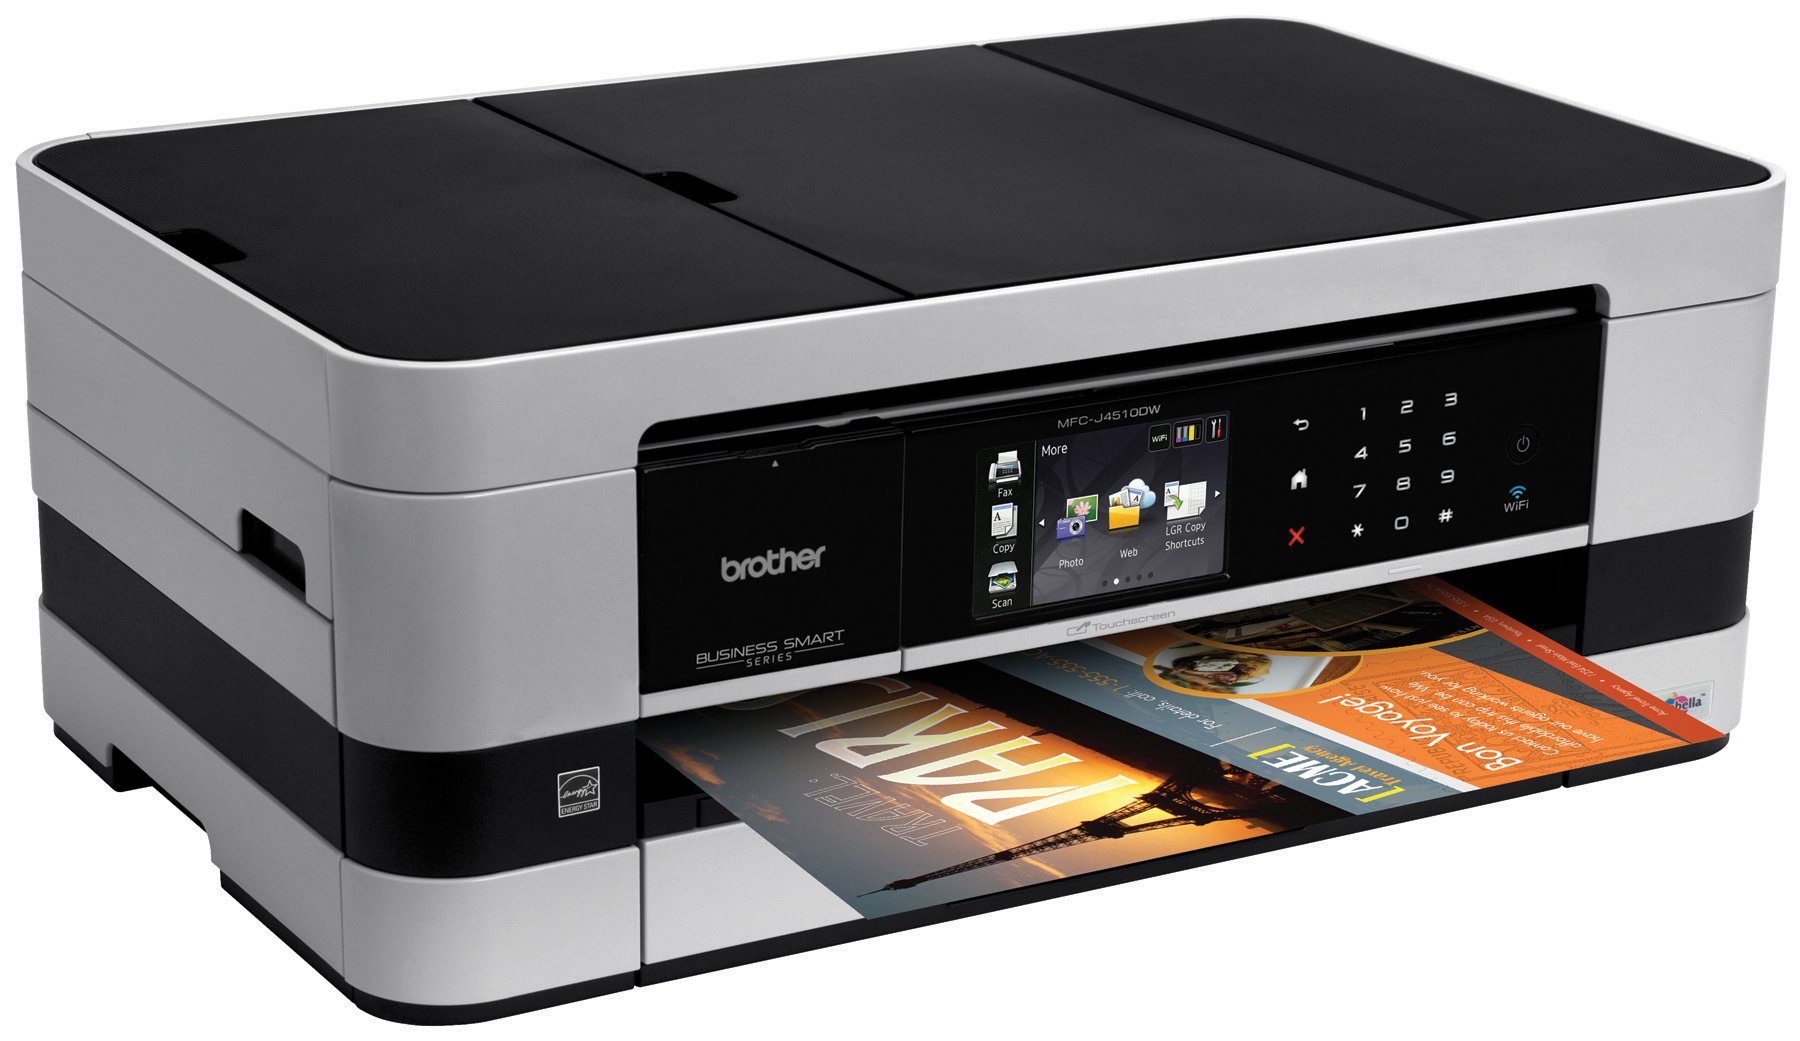 Brother Printer MFCJ4510DW Wireless Color Photo Printer with Scanner, Copier and Fax, Amazon Dash Replenishment Ready